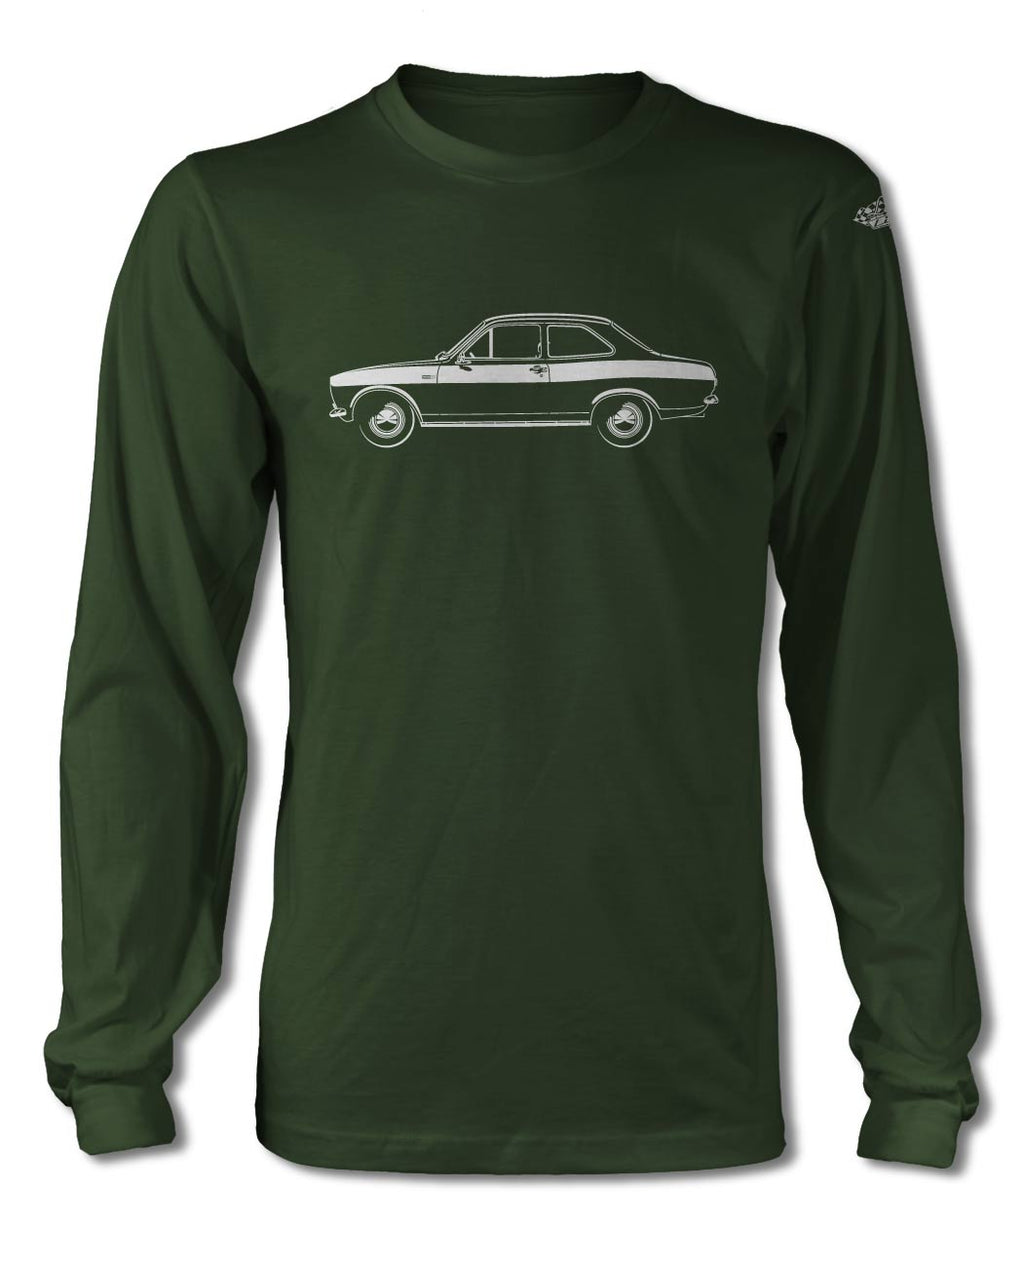 Ford Escort MKI T-Shirt - Long Sleeves - Side View